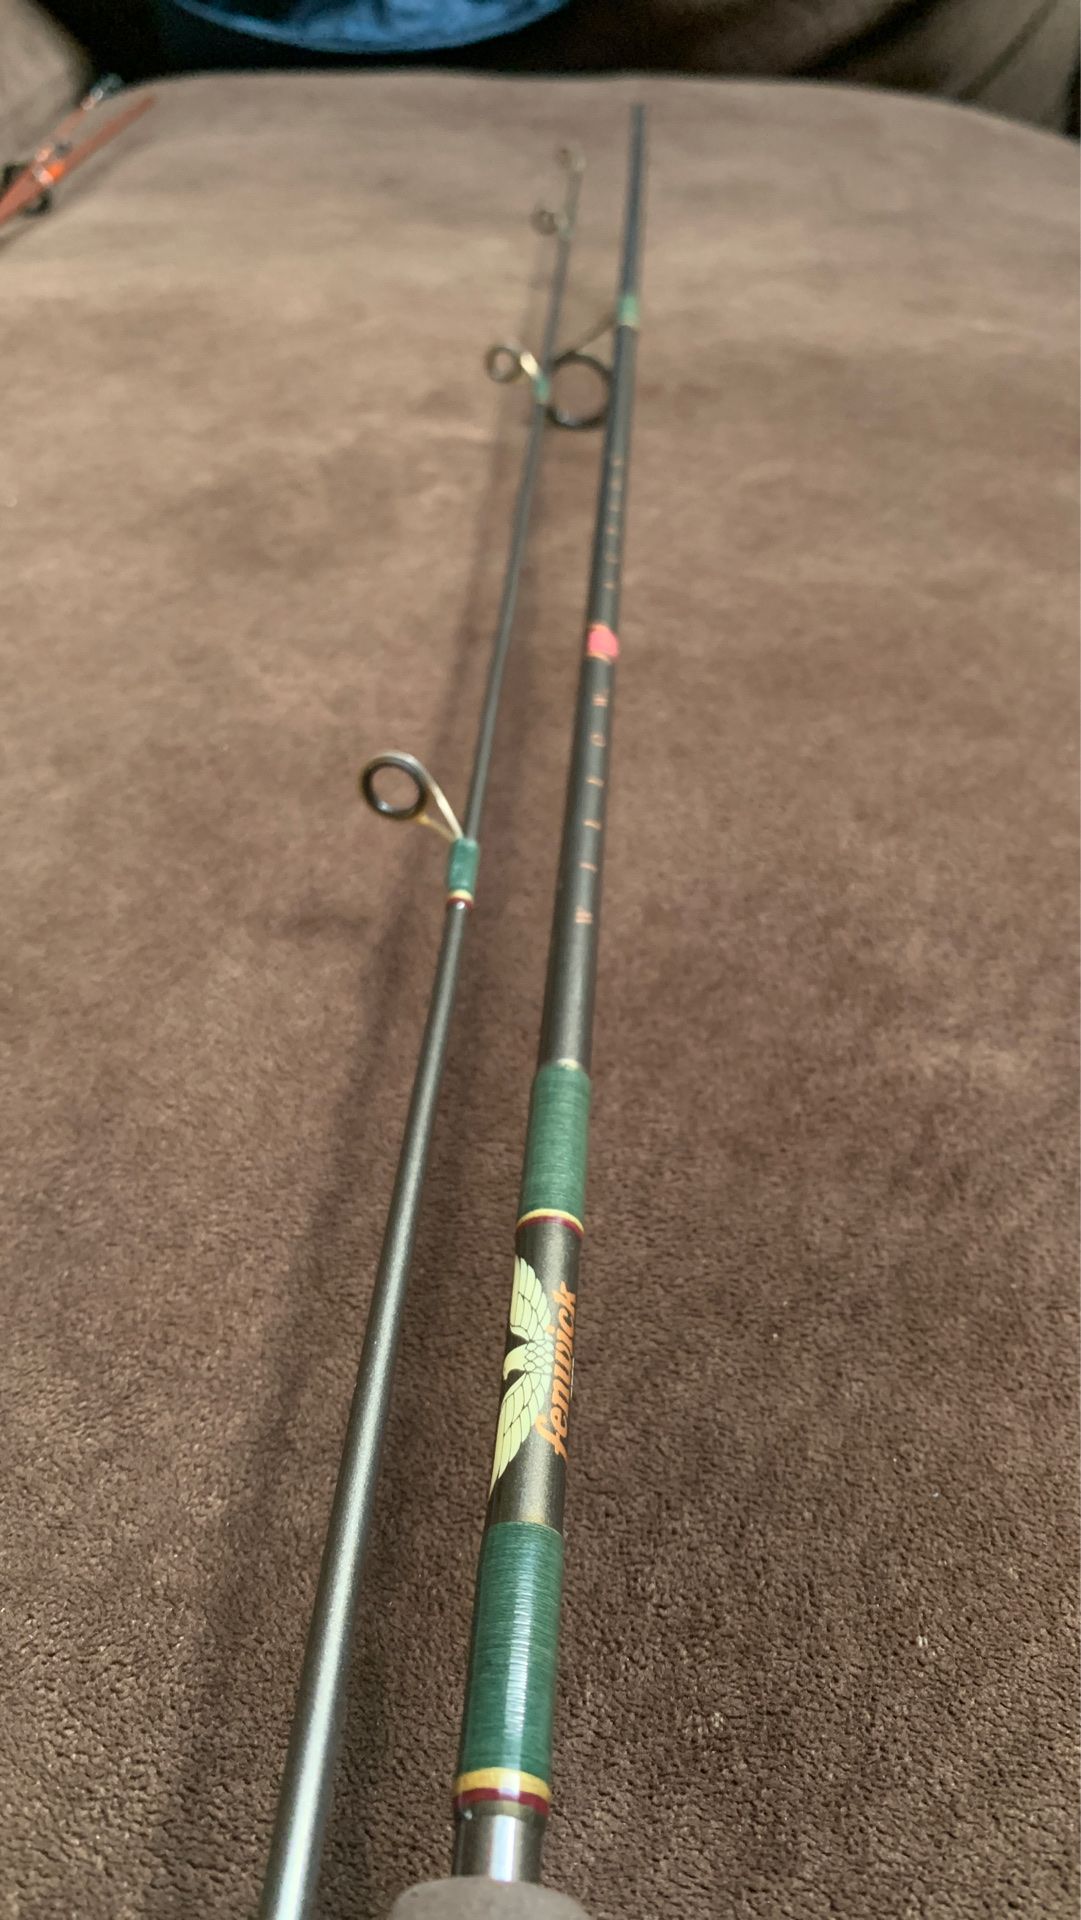 Fenwick fishing rod